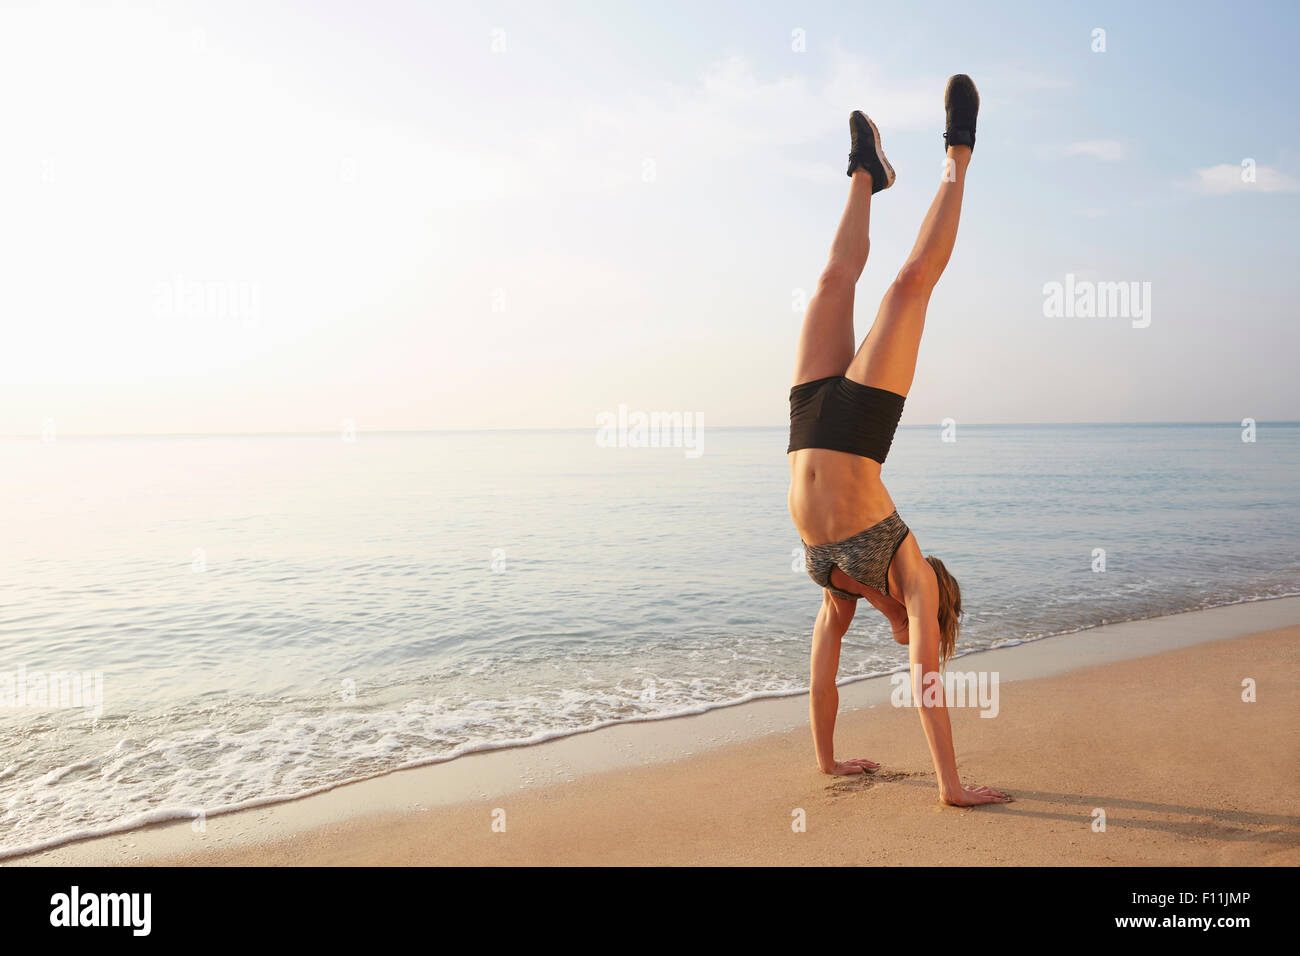 Athlete doing handstand on beach Stock Photo